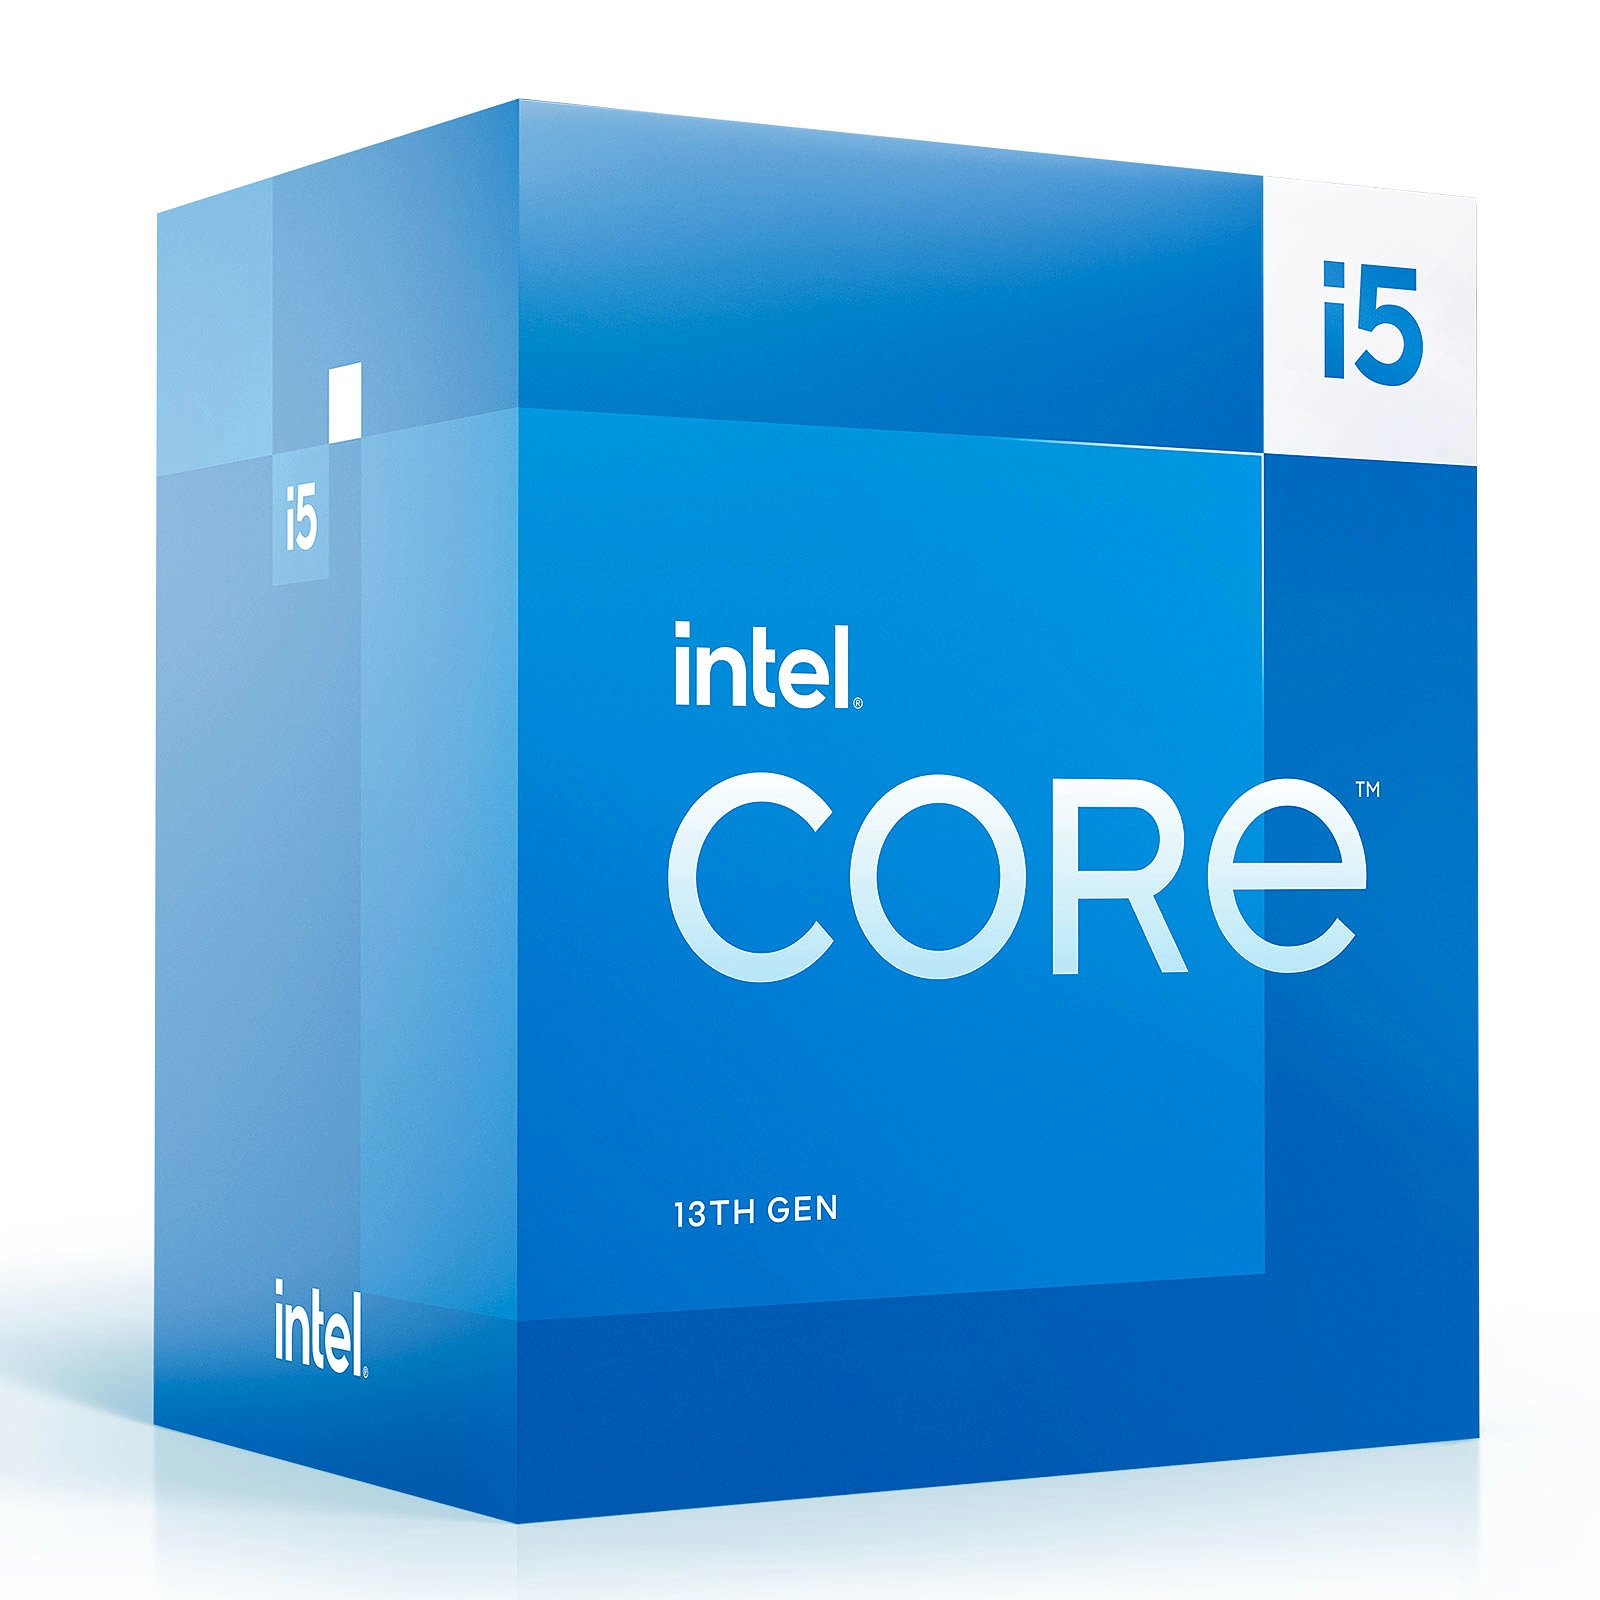 Intel® Core™ i5-13400F, S1700, 1.8-4.6GHz, 10C (6P+4E) / 16T, 20MB L3 + 9.5MB L2 Cache, No Integrated GPU, 10nm 65W, Box